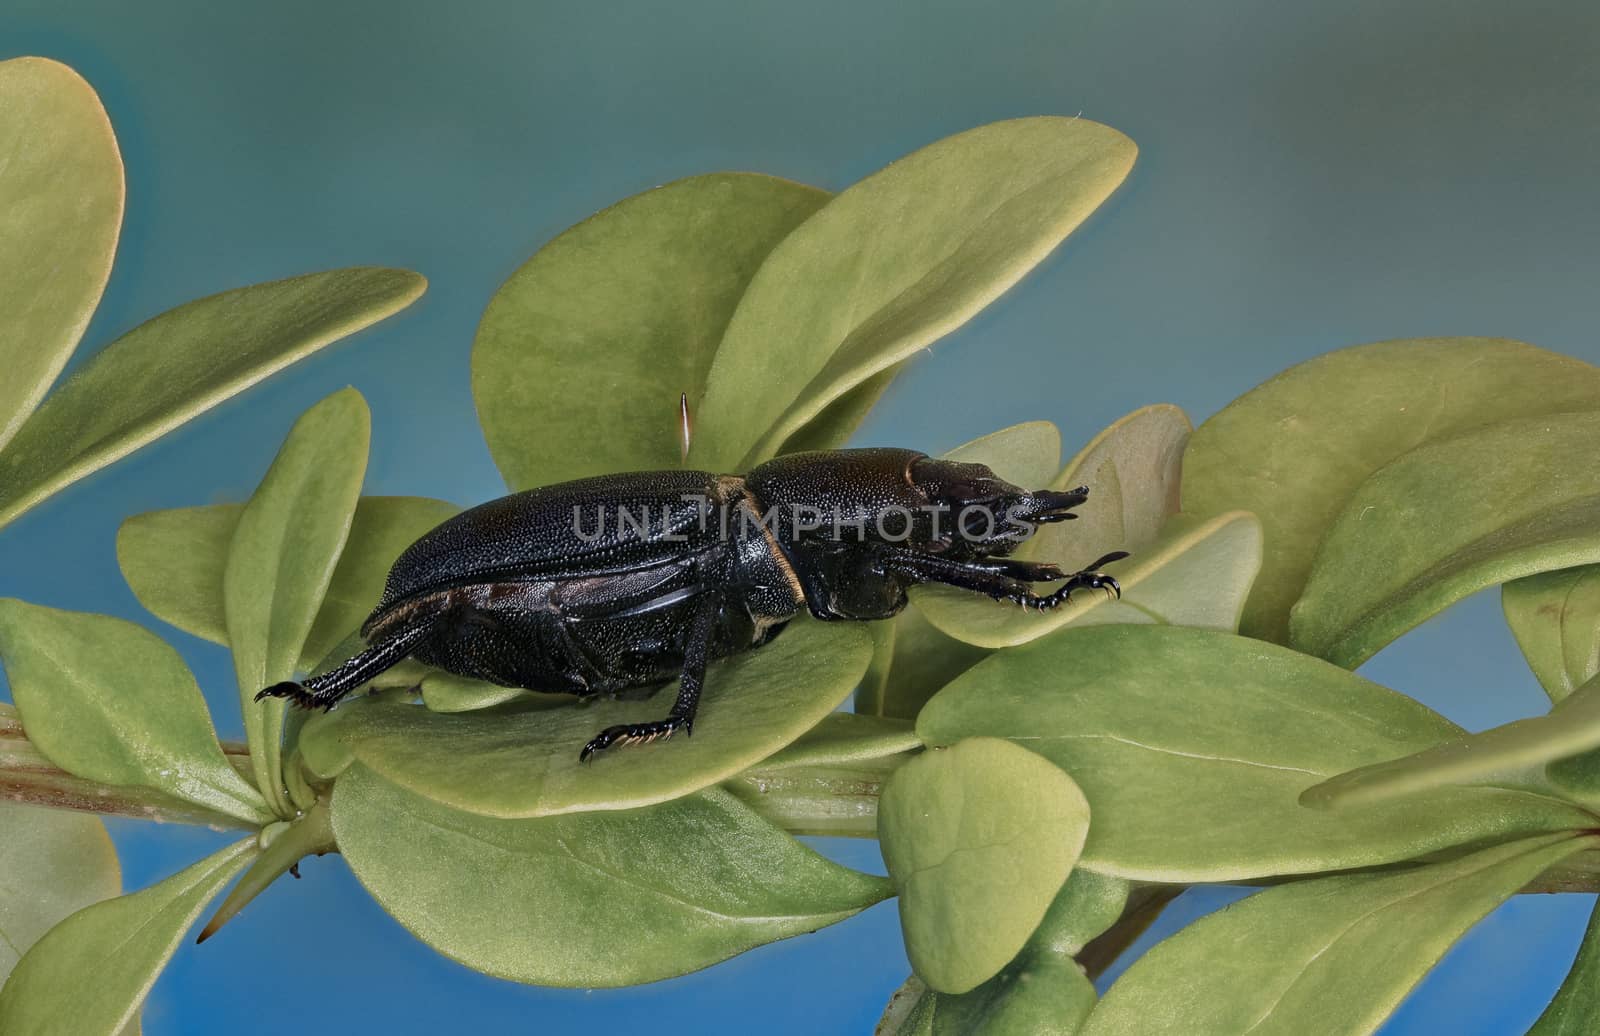 Lesser Stag Beetle on a Plant  -  Dorcus parallelipipedus (Linnaeus, 1758)